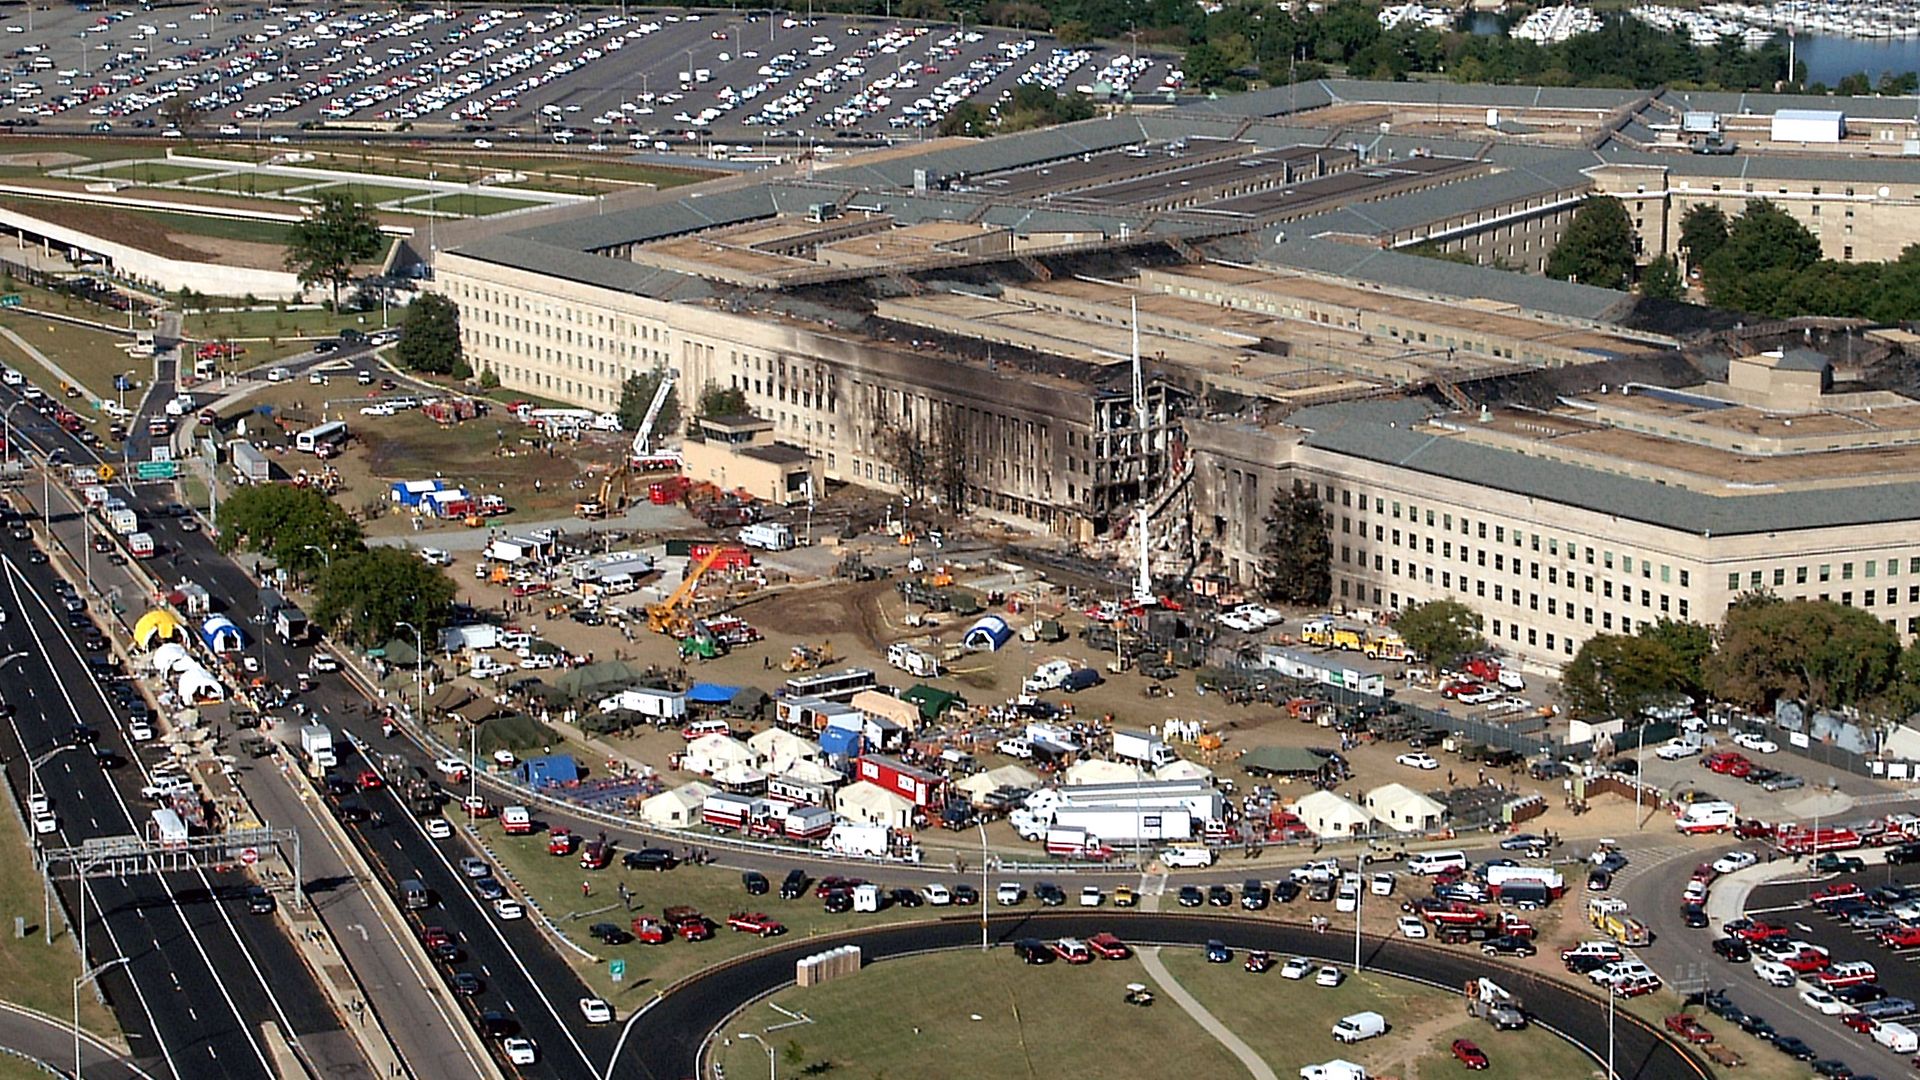 9/11: The Plane that Hit the Pentagon Backdrop